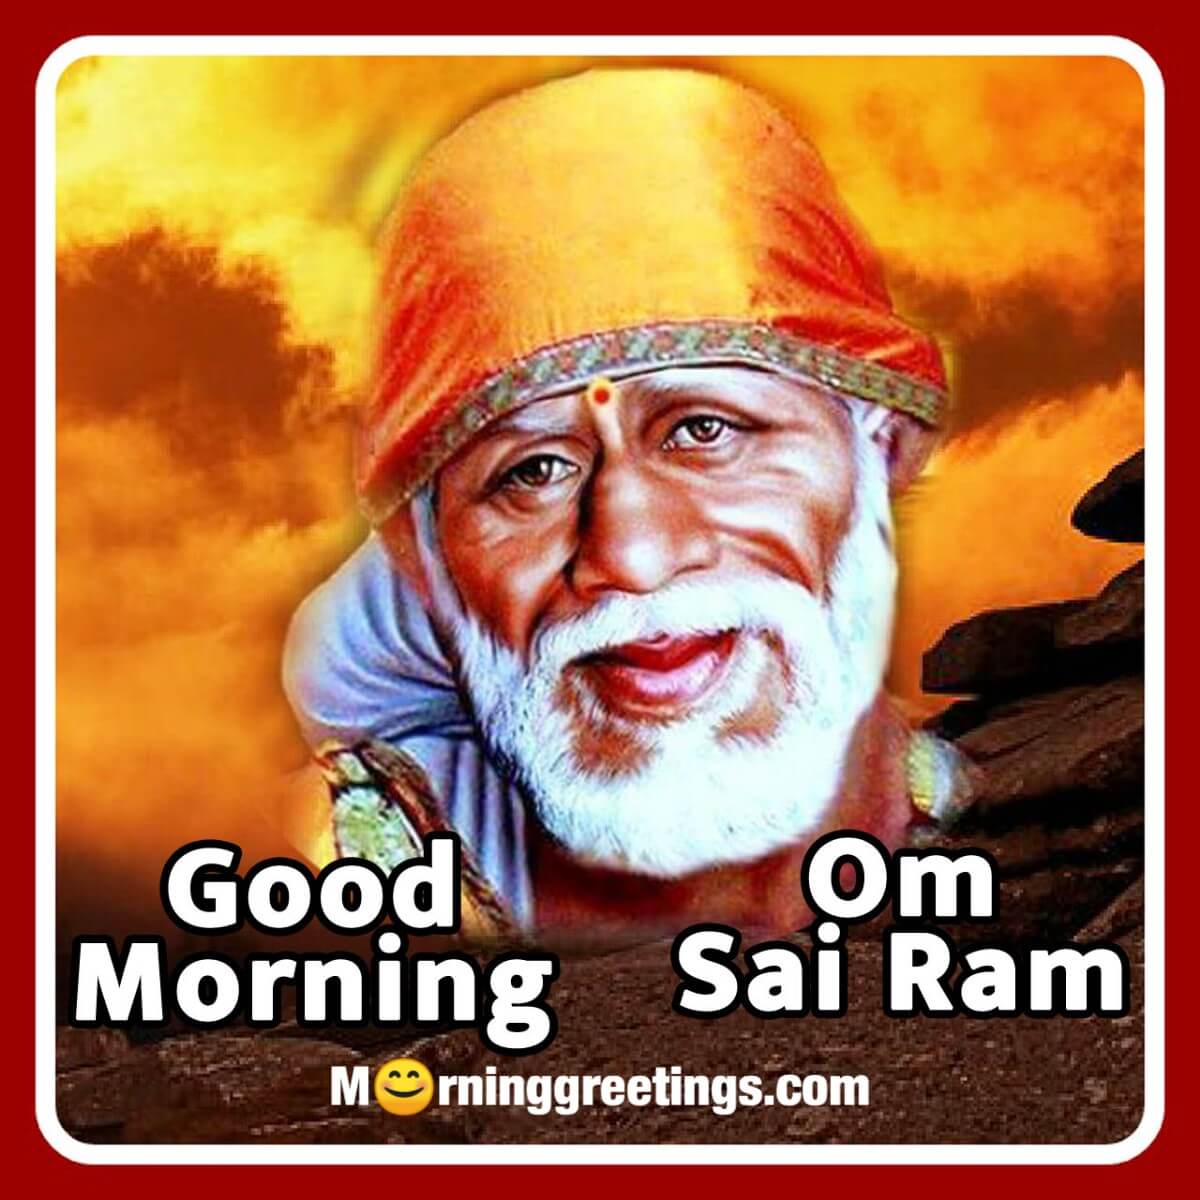 Good Morning Om Sai Ram Card